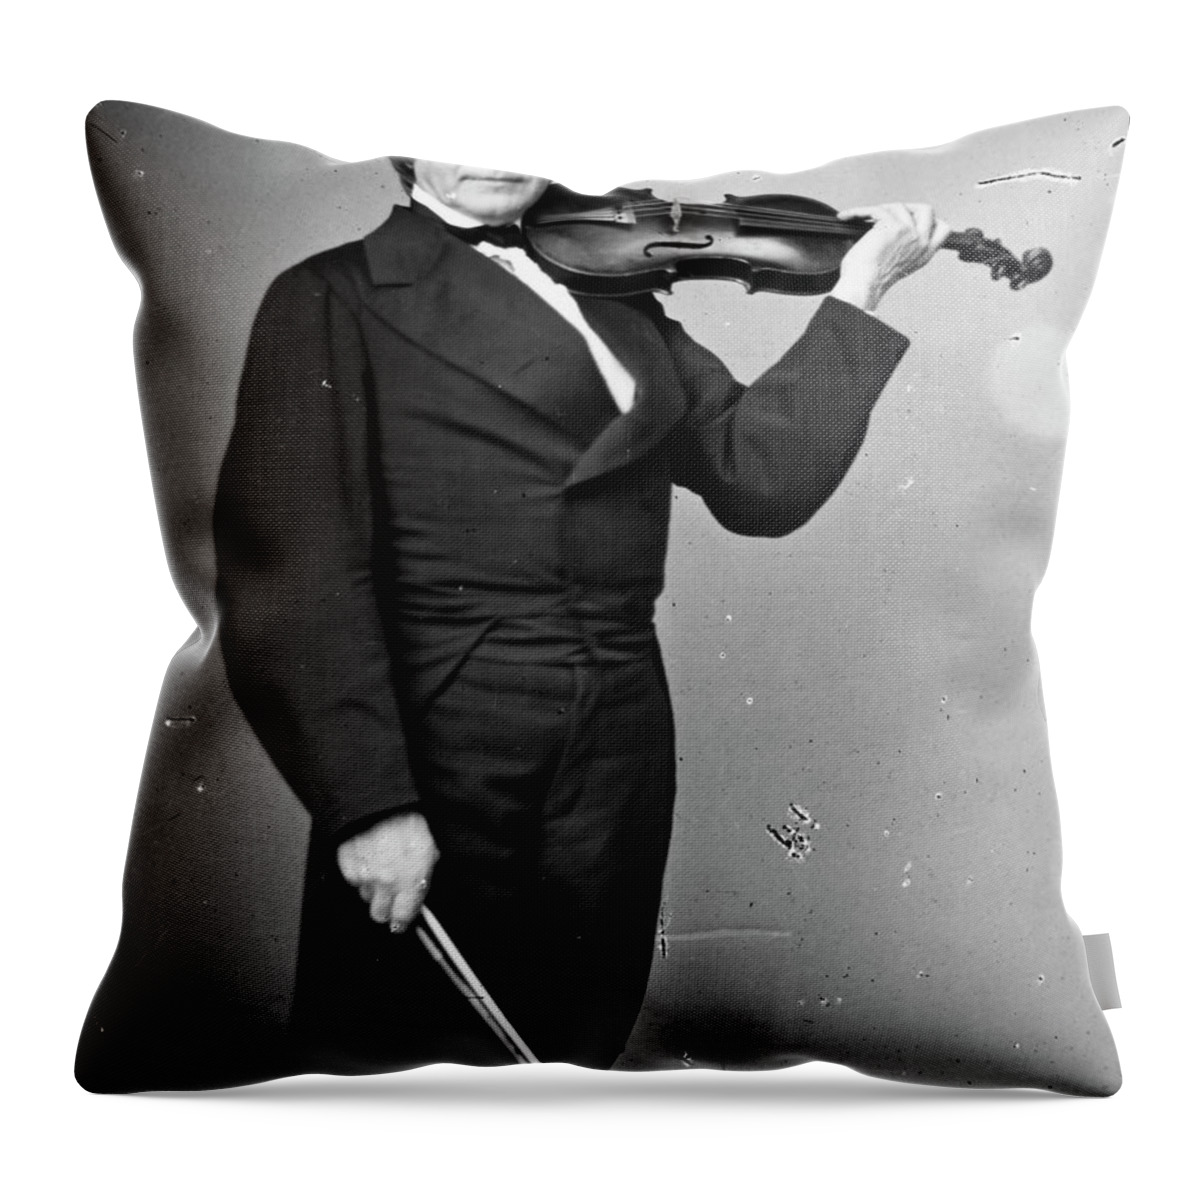 19th Century Throw Pillow featuring the photograph Ole Bornemann Bull (1810-1880) by Granger